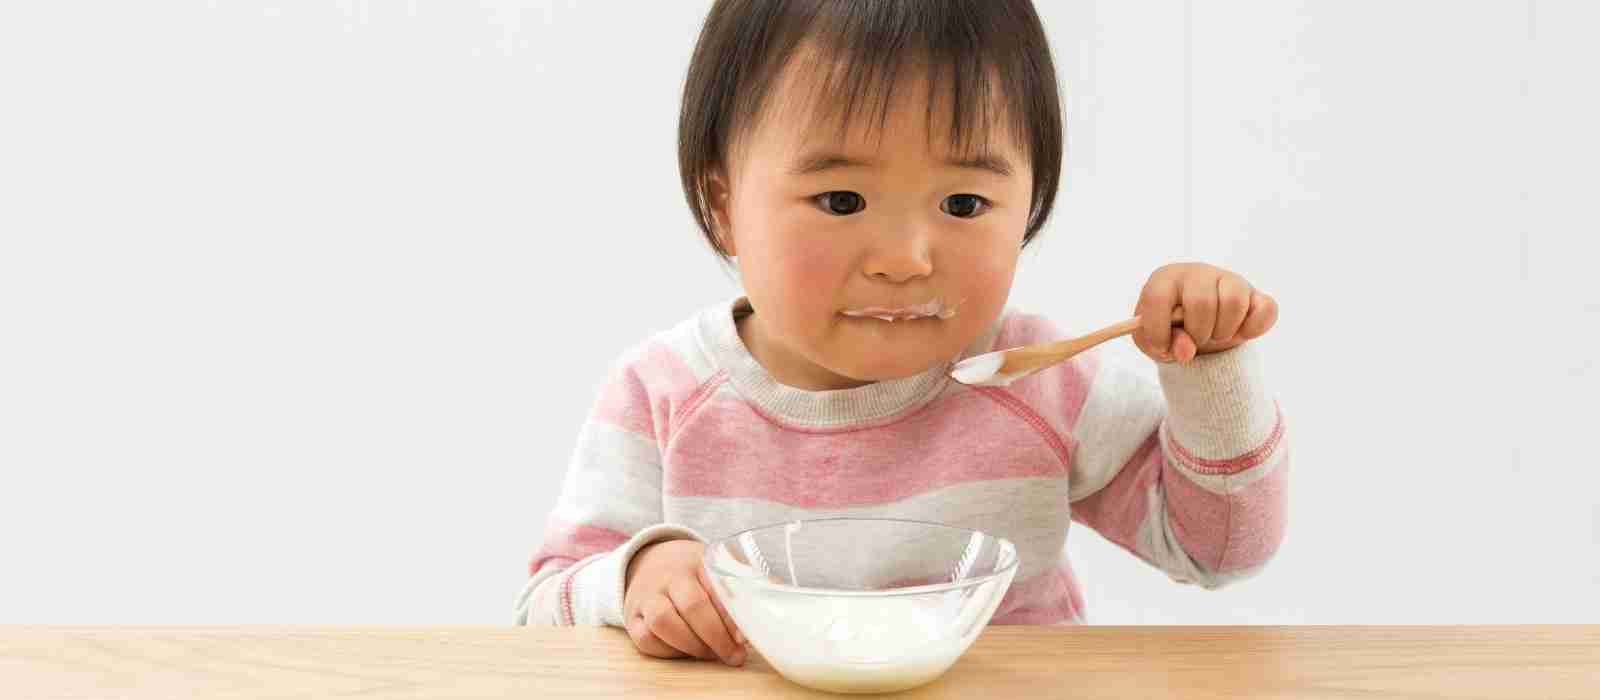 Can Yogurt Cause Diaper Rash